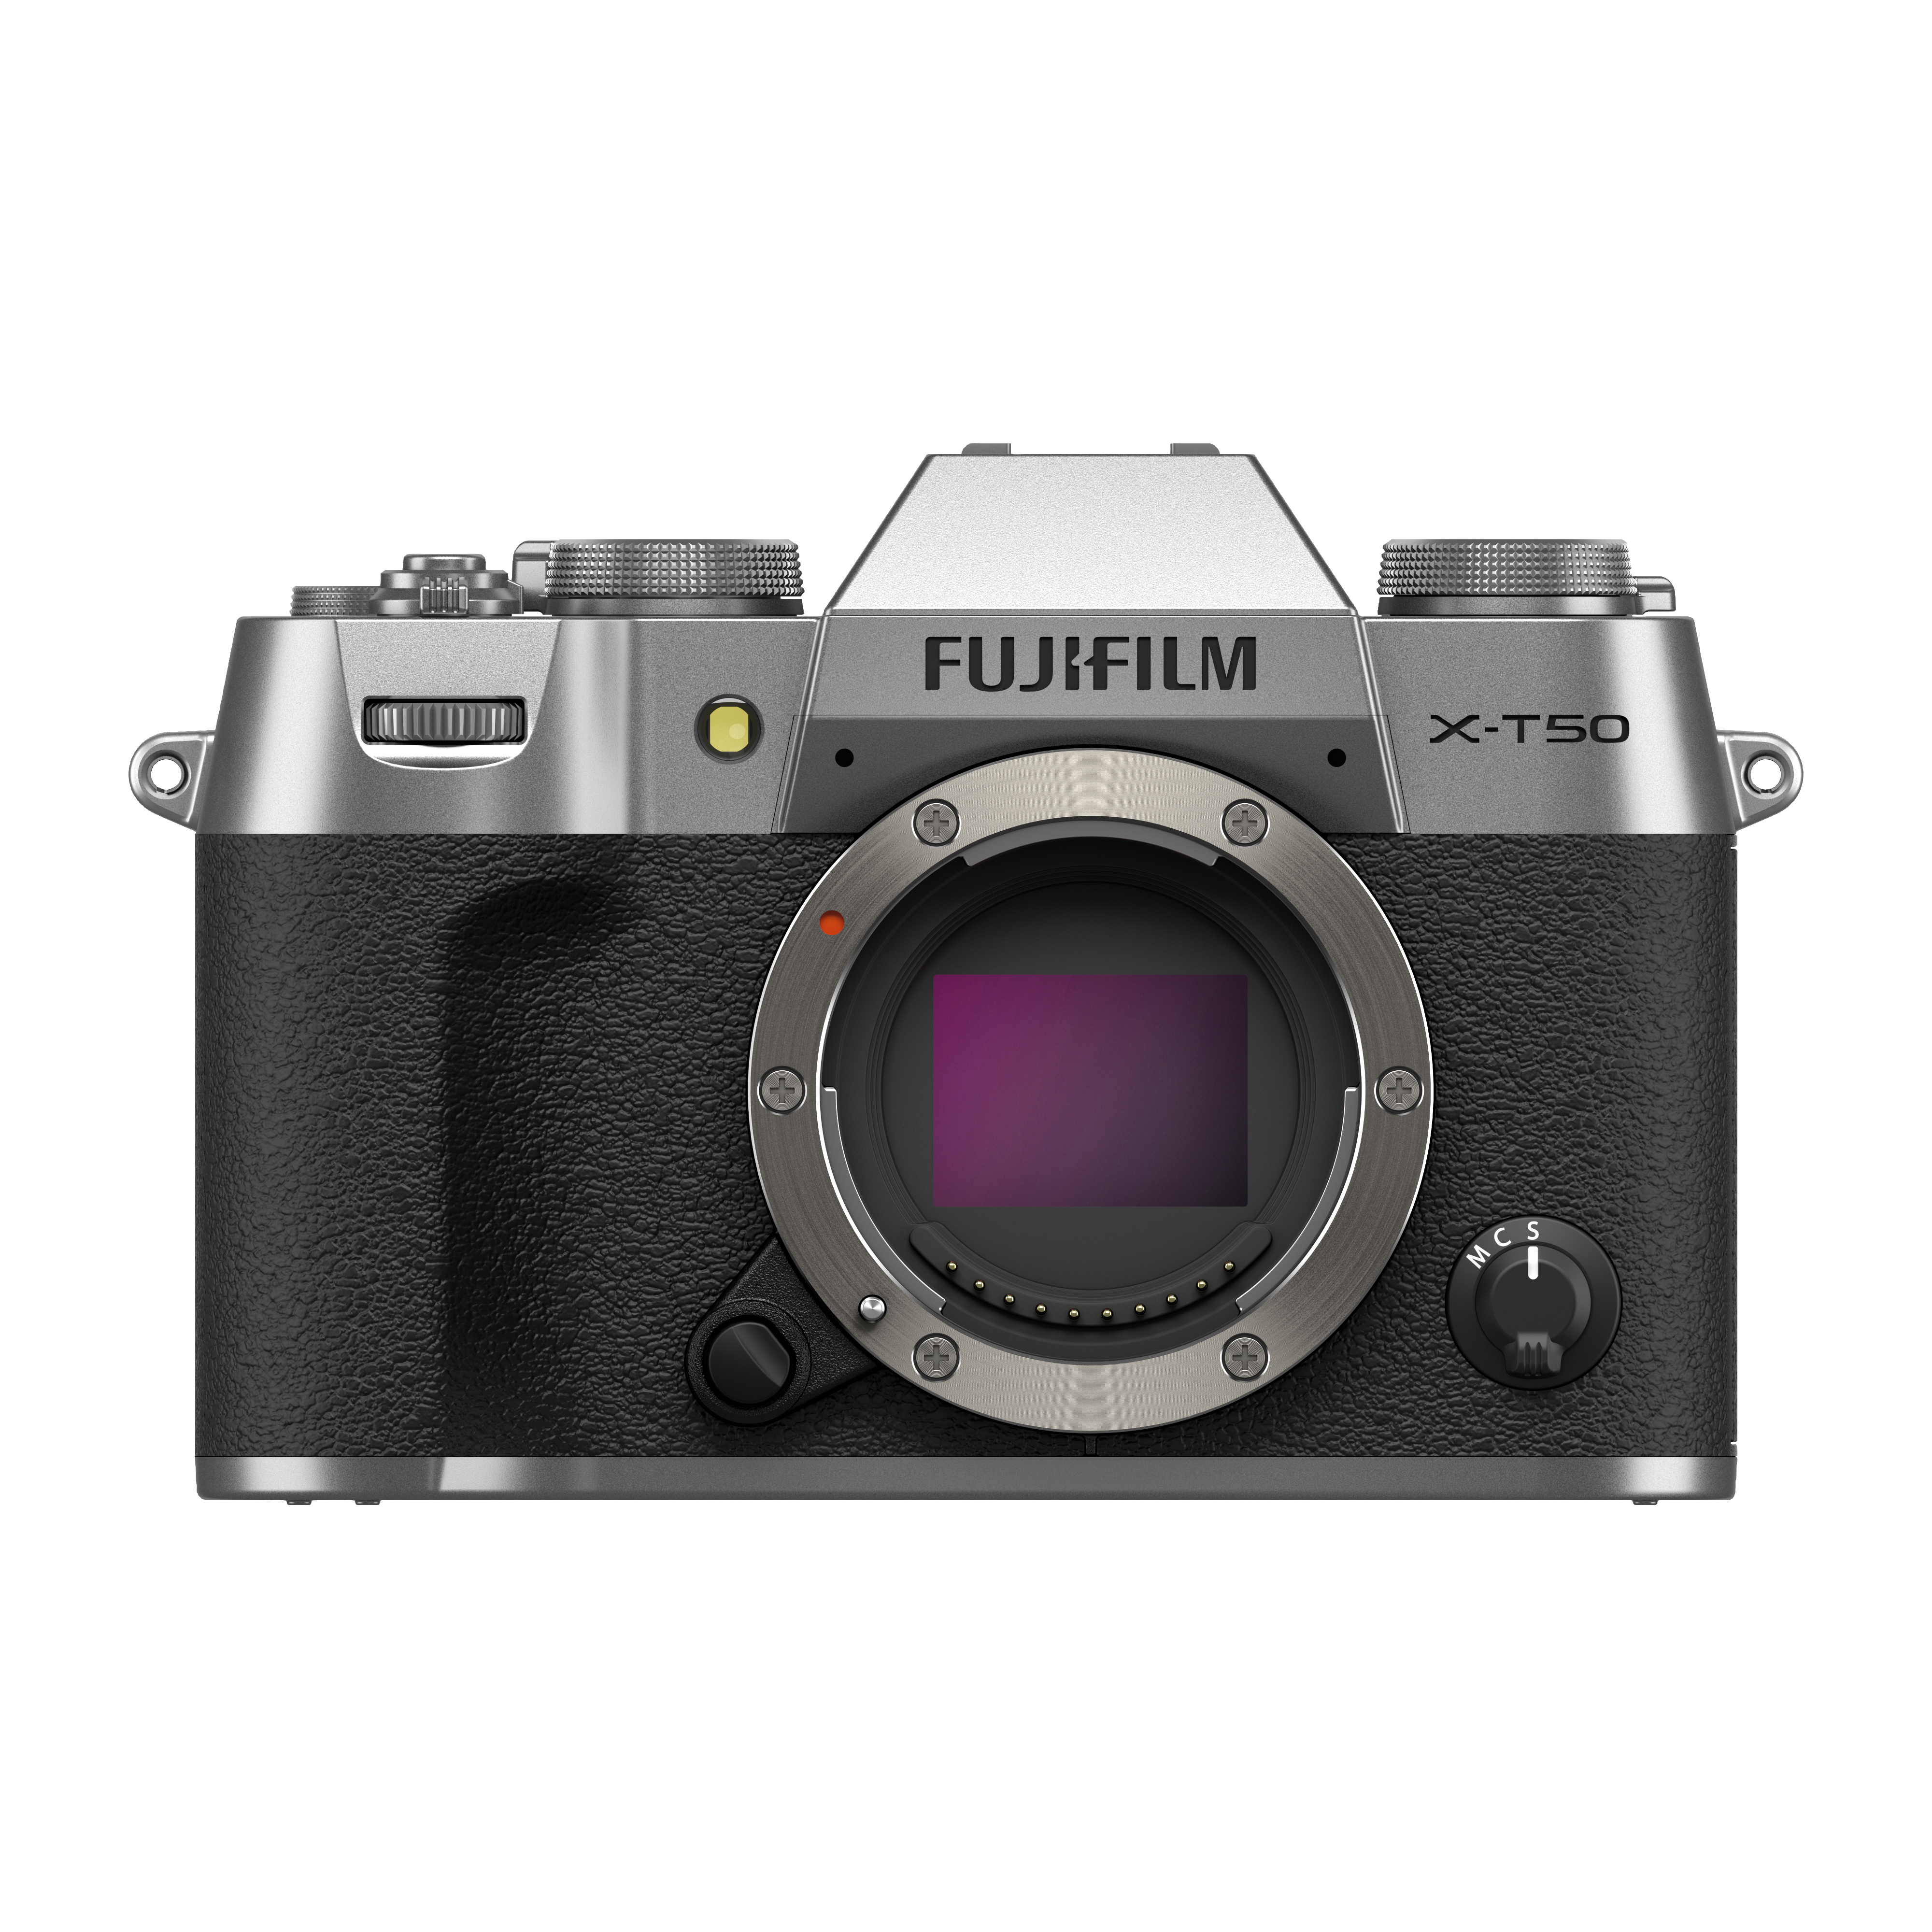 Fujifilm X-T50 Mirrorless Camera (Silver)